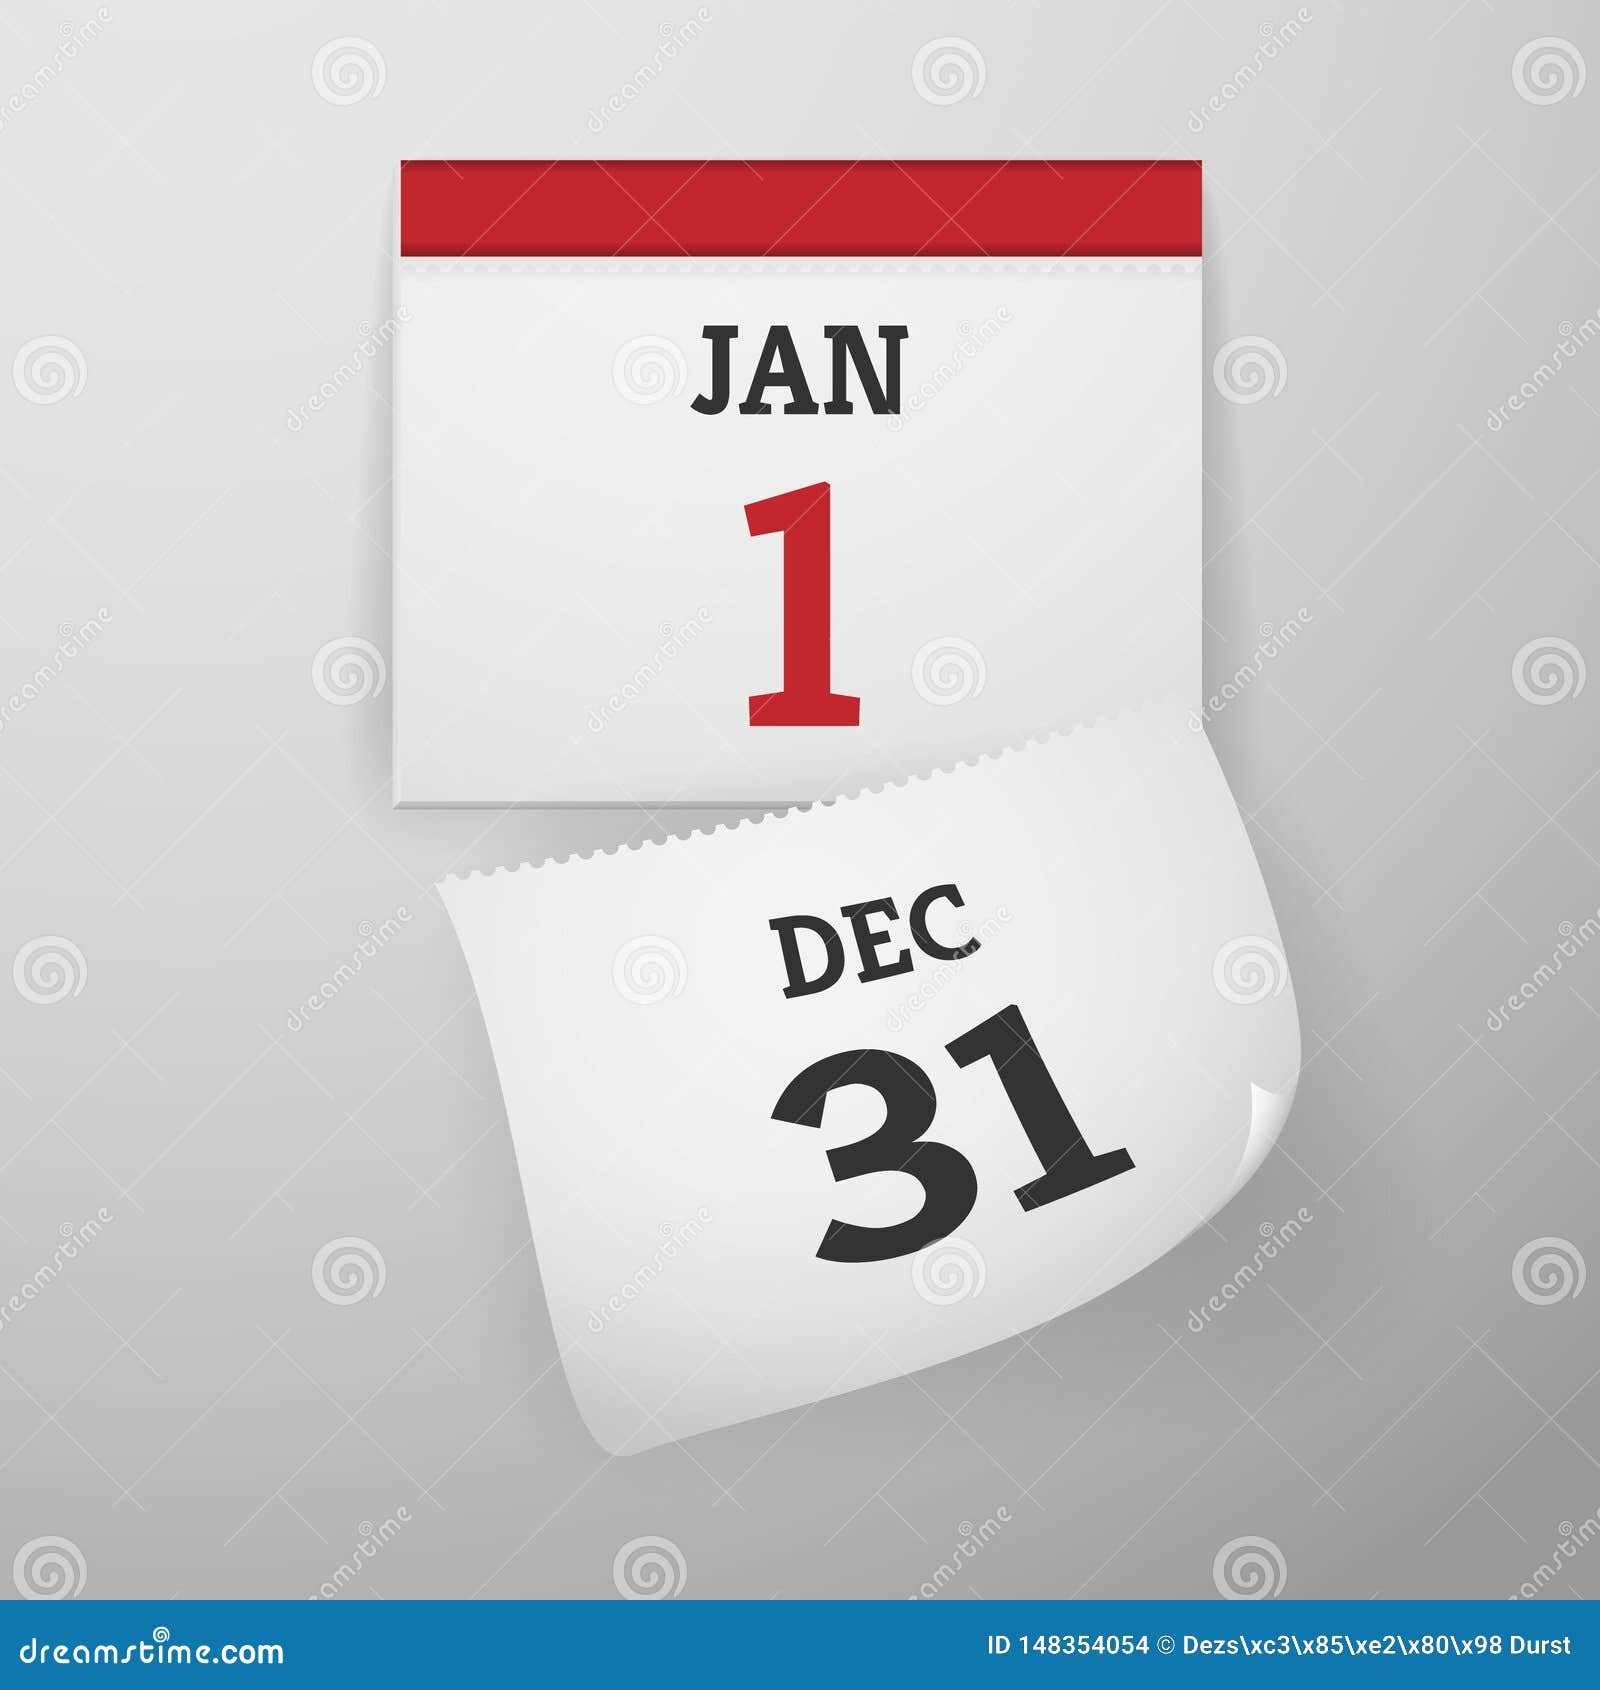 Realistic Calendar Illustration with Falling Sheet Stock Illustration